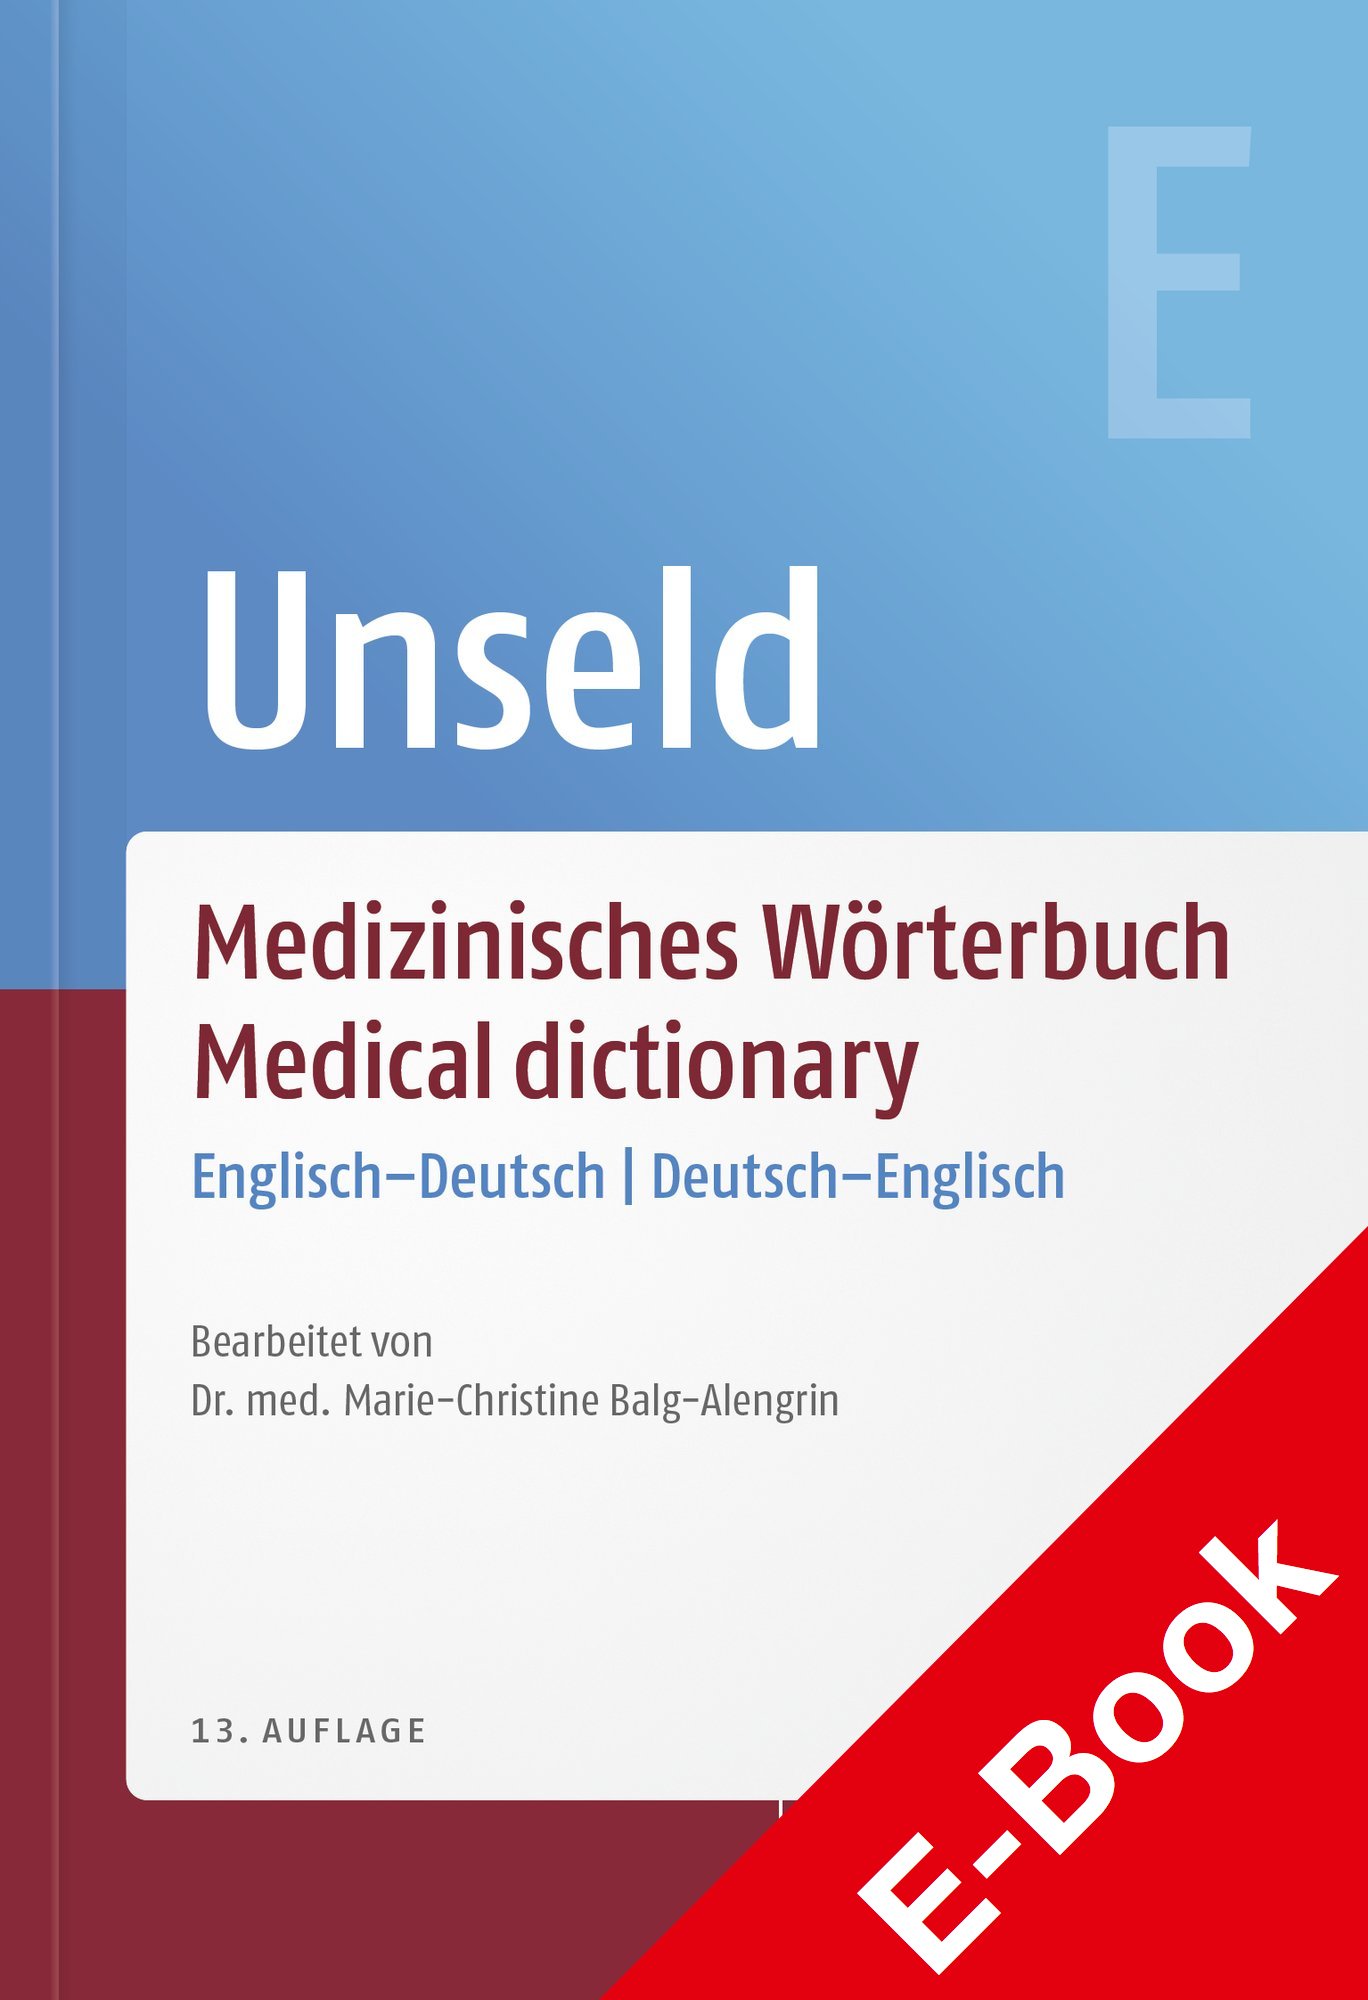 Medizinisches Wörterbuch | Medical dictionary